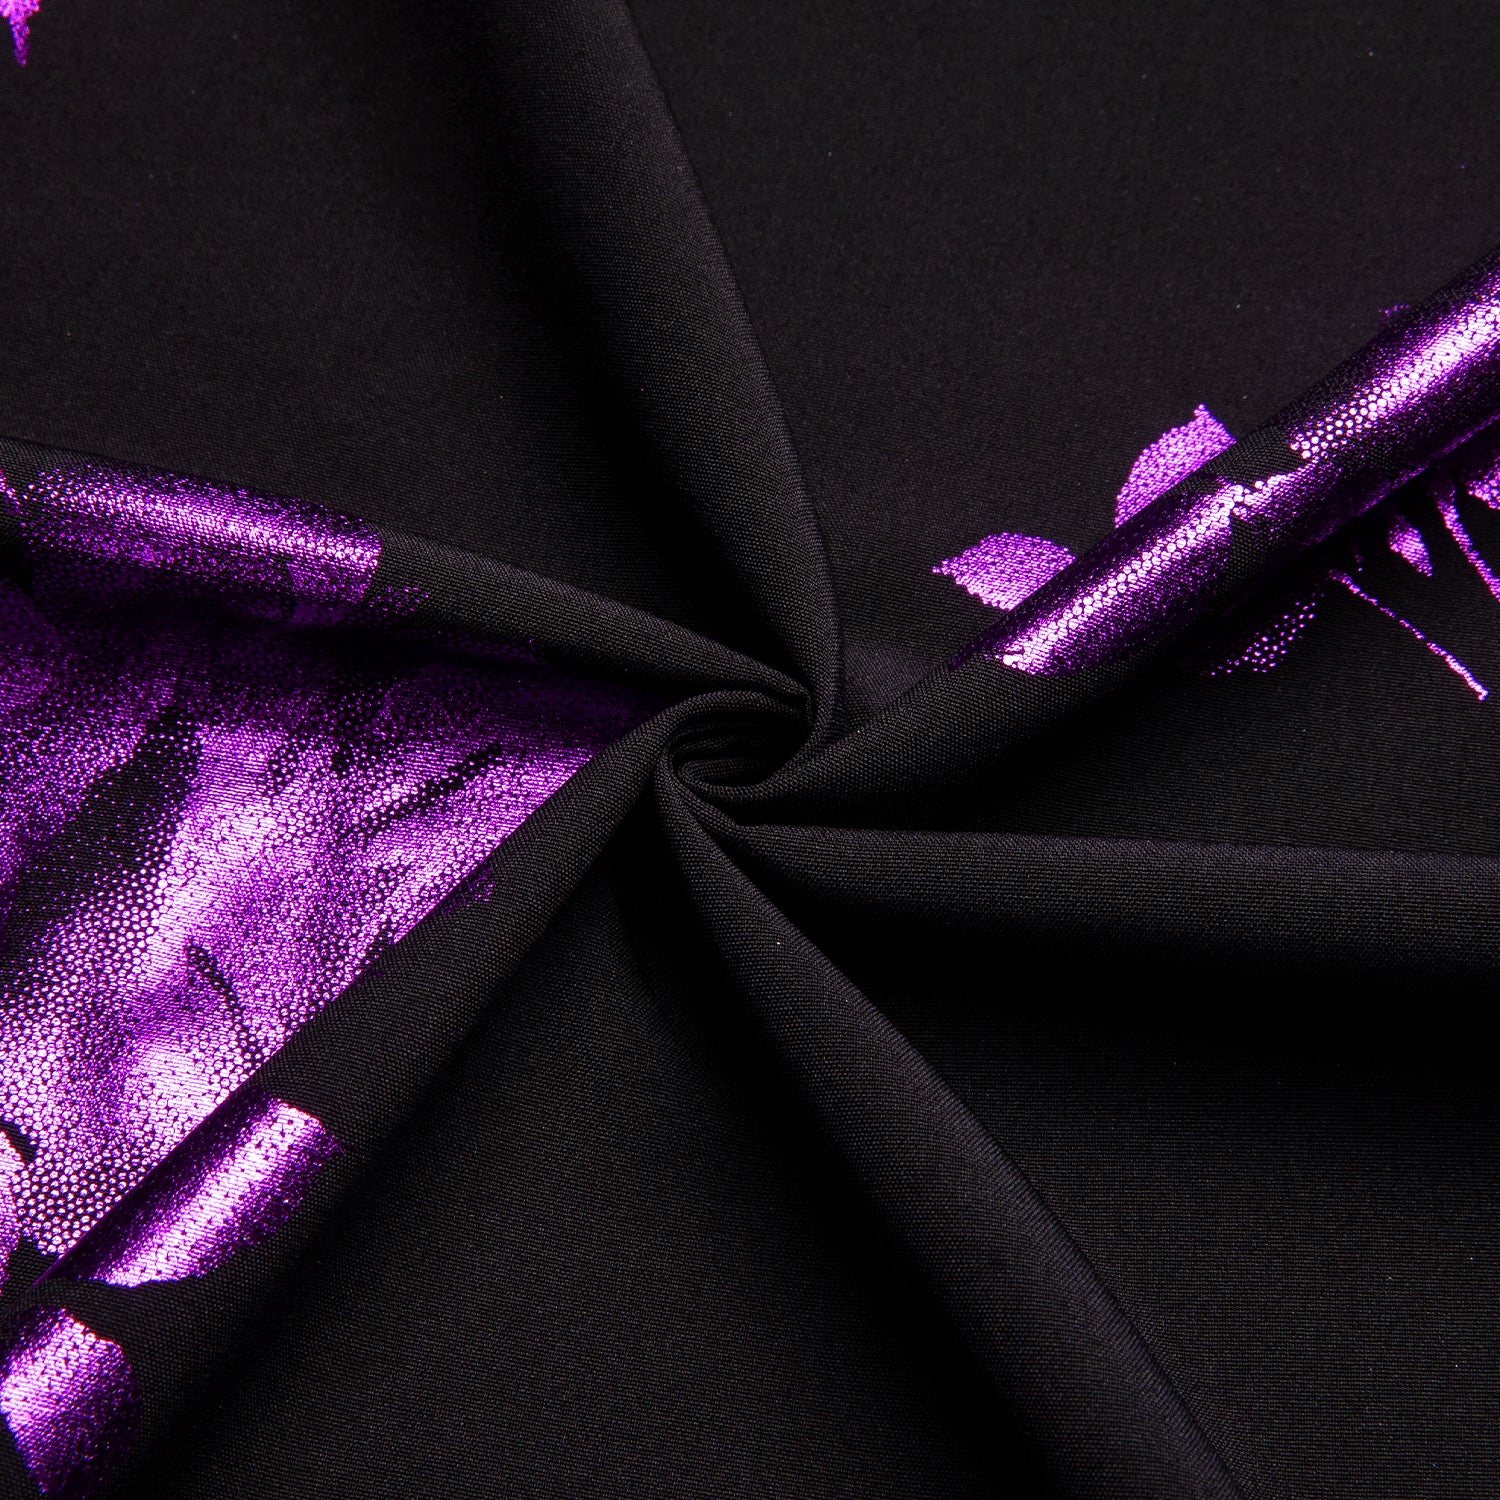 Black Purple Floral Silk Men's Long Sleeve Shirt